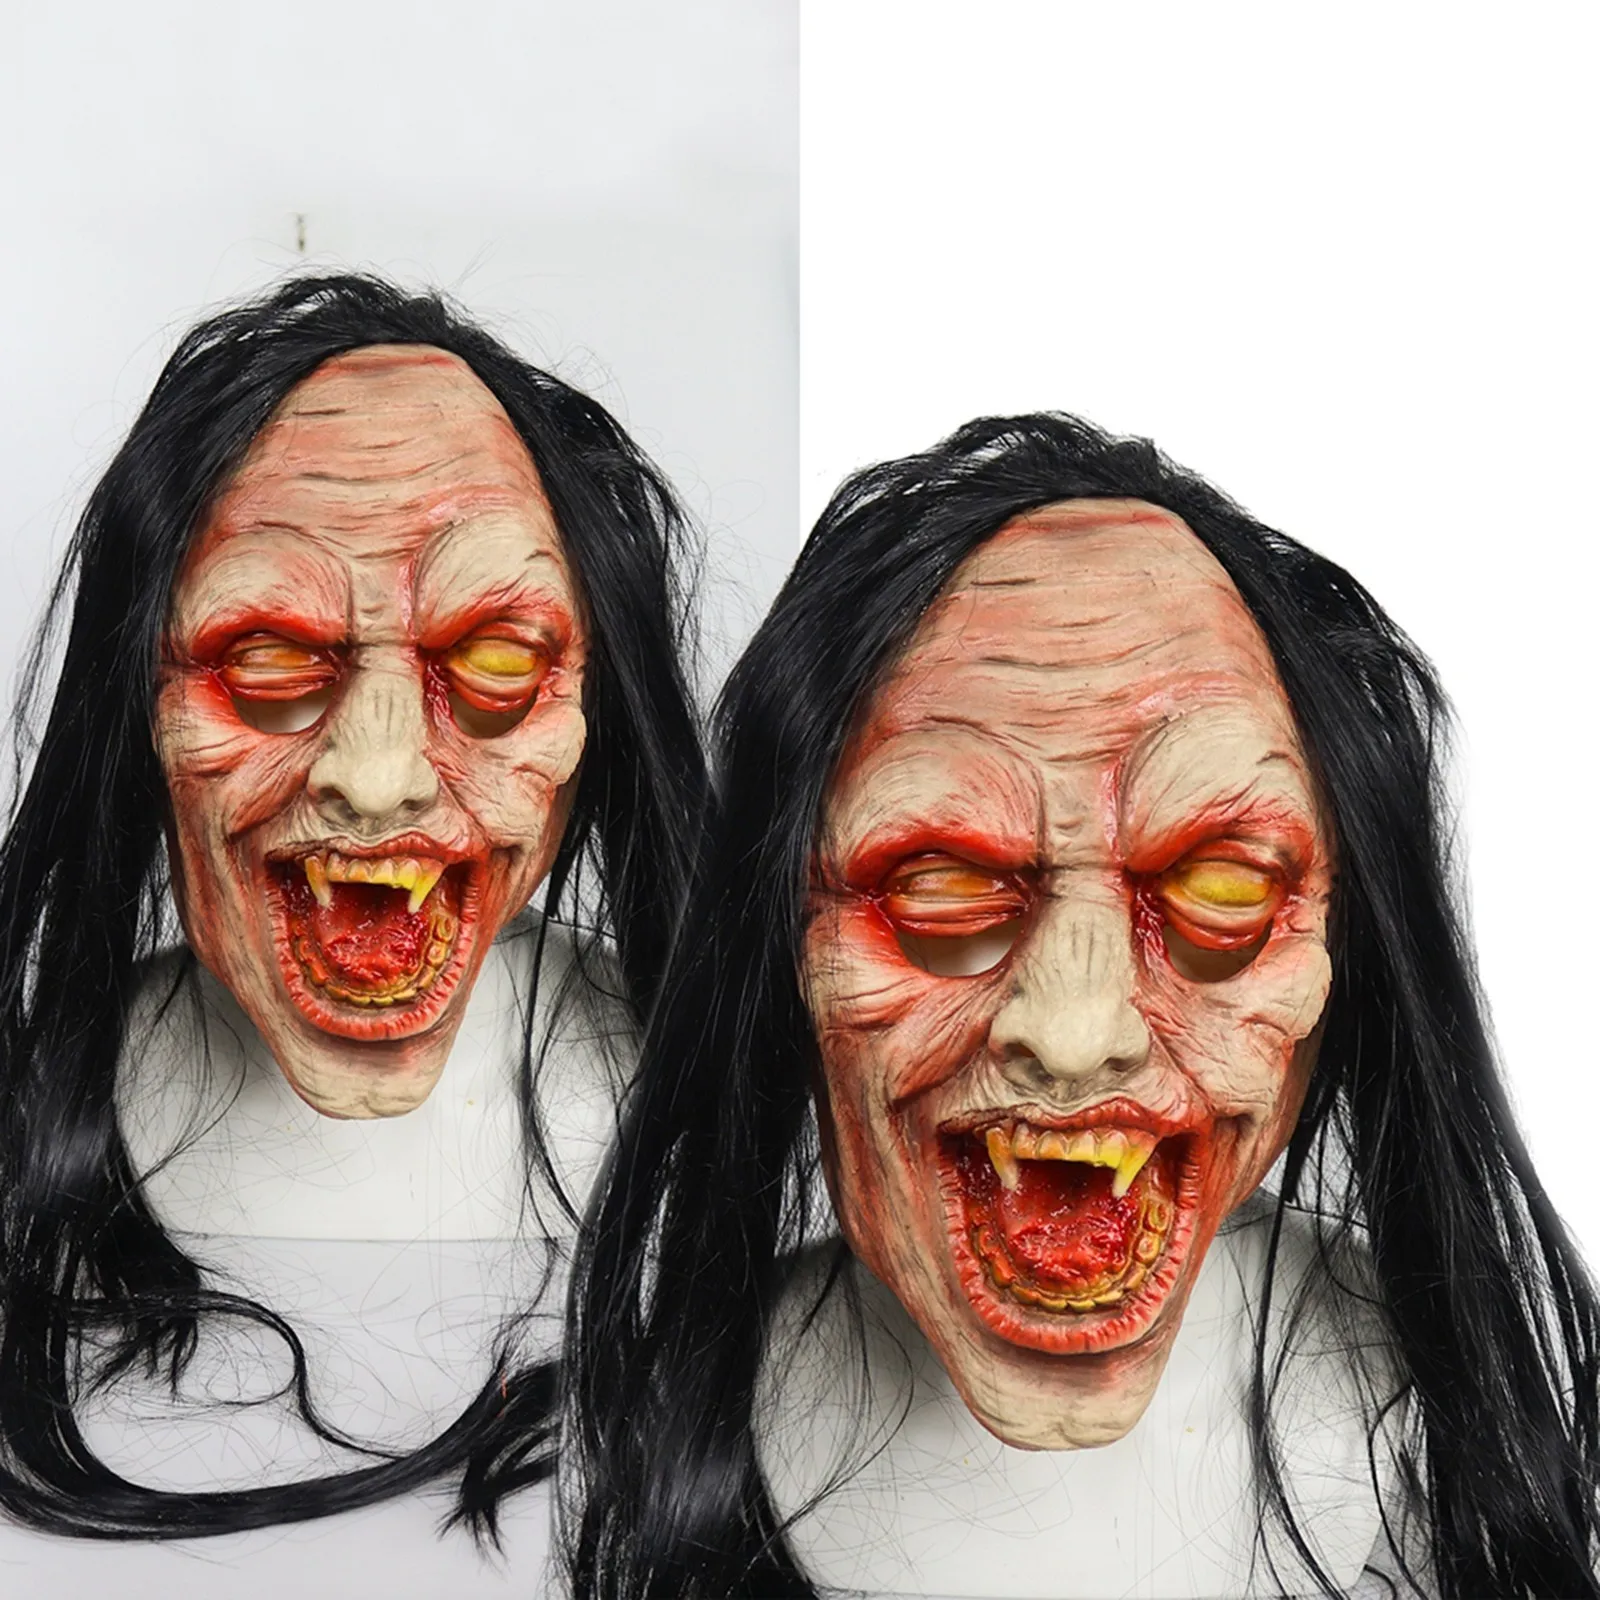 

Halloween Horror Bloody Rotten Face Mask Black Long Hair Latex Headgear Scary Mask Horror headgear Scary cosplay Party Costume